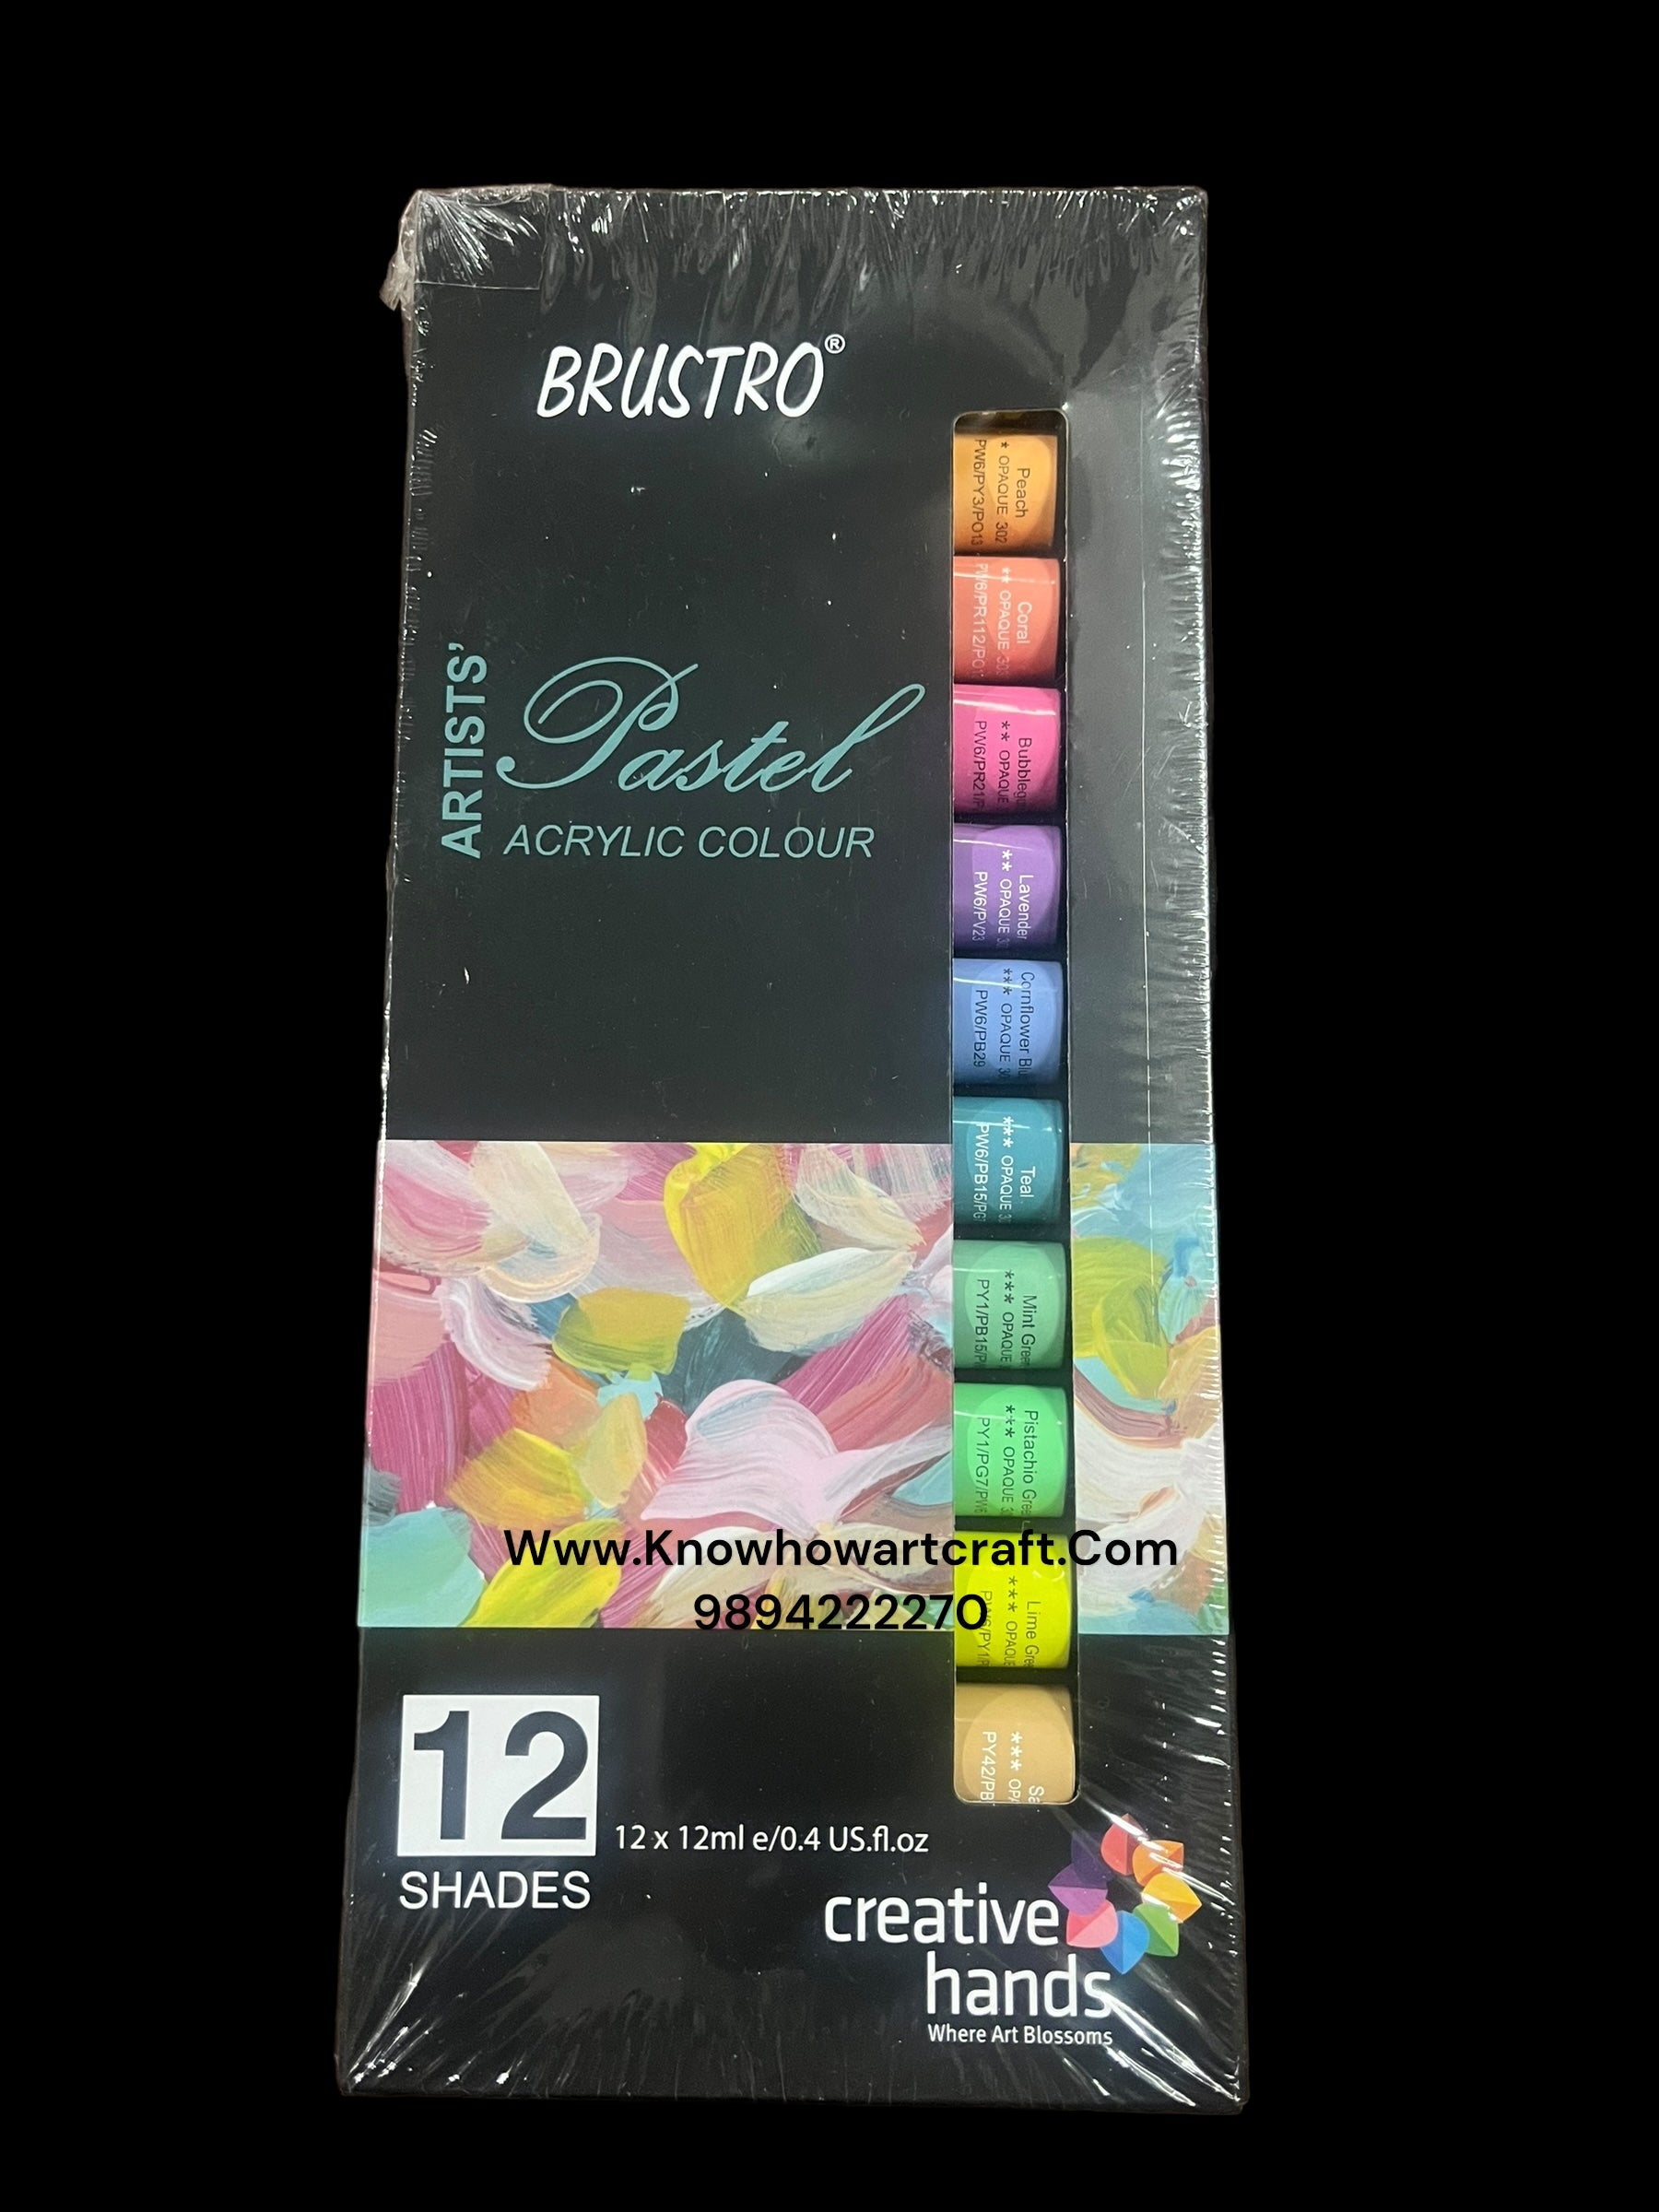 Brustro Artists pastel Acrylic colour 12 shades